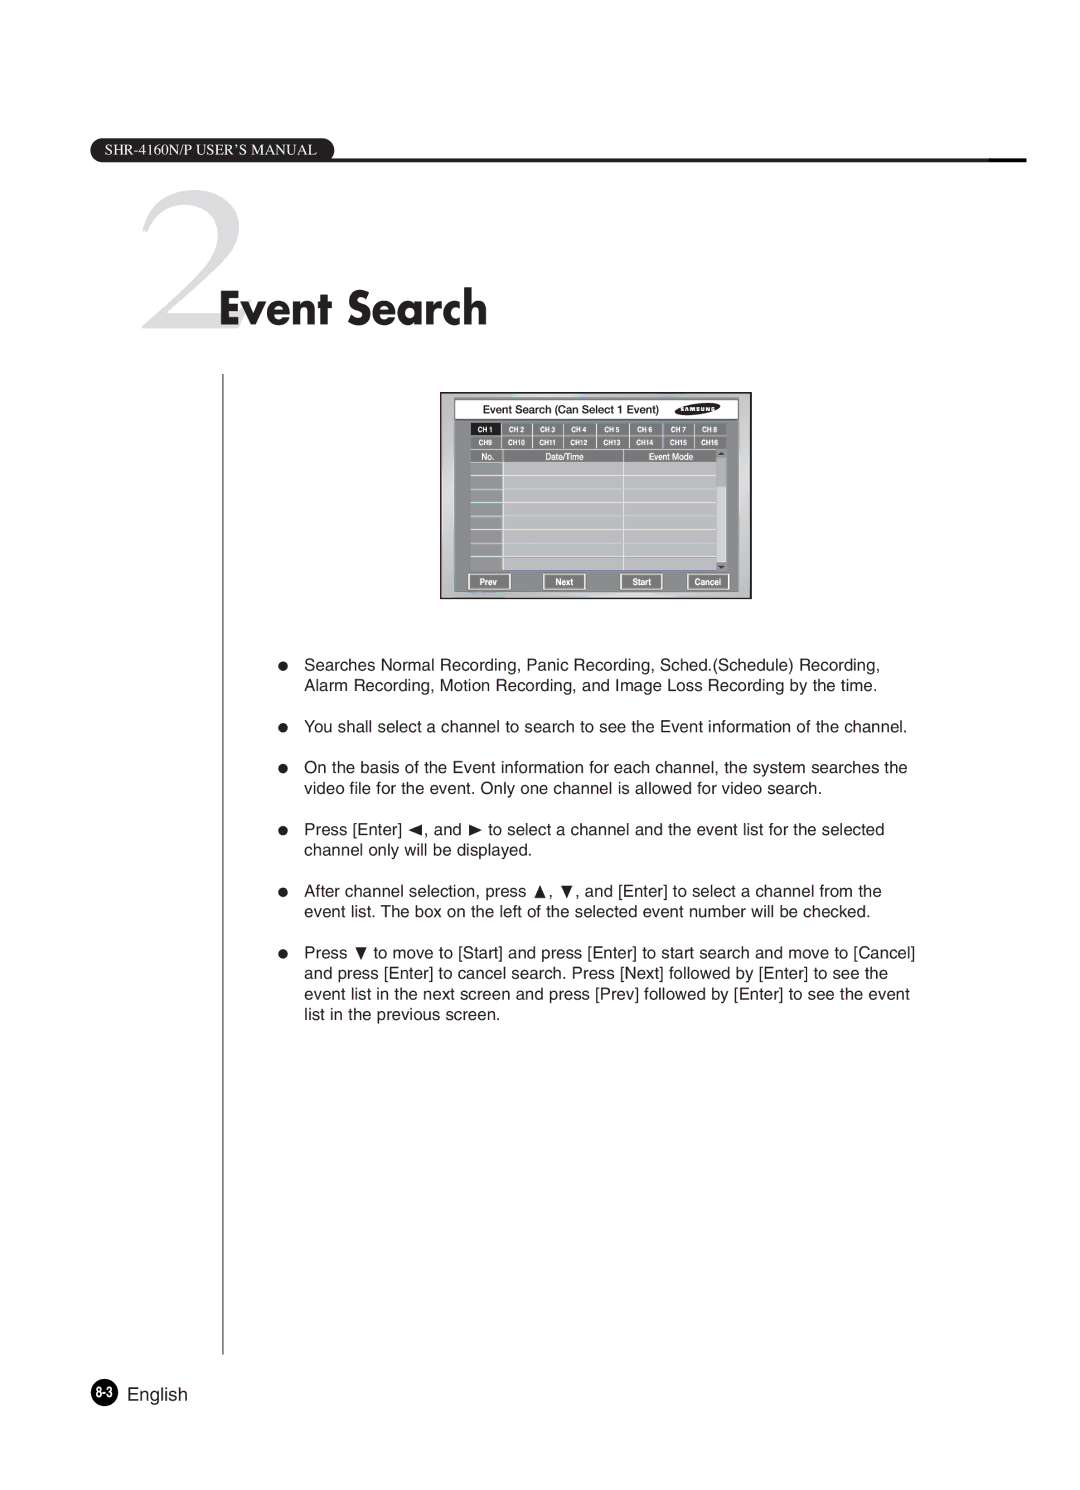 Samsung SHR-4160P manual 2Event Search, 3English 